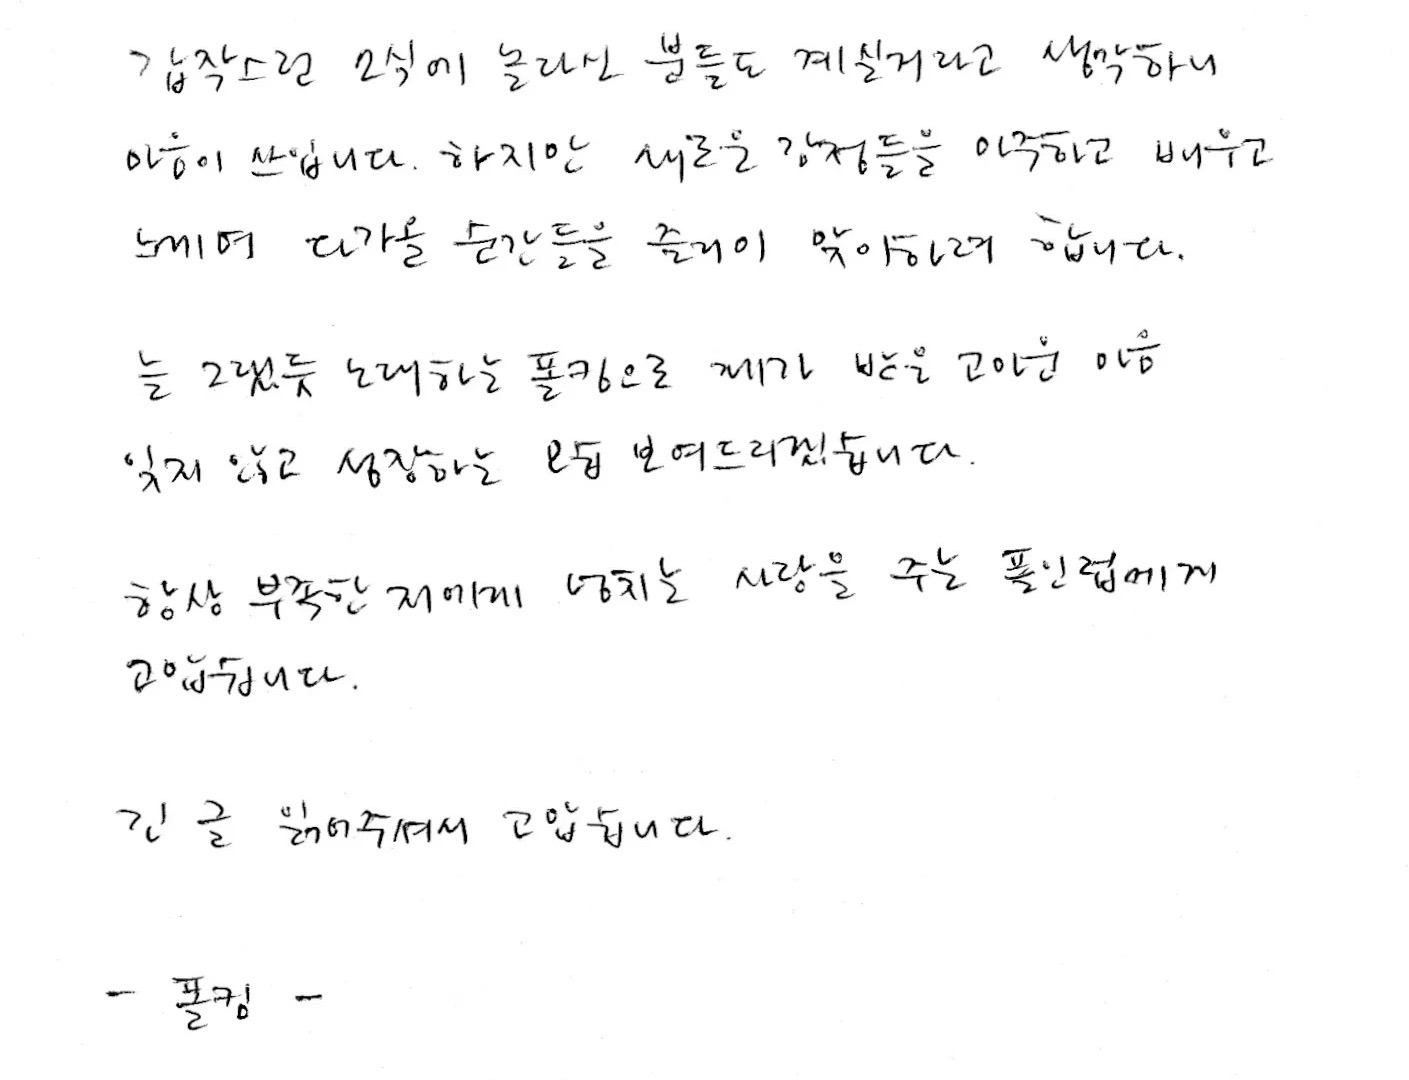 Paul Kim Personally Announces Marriage In Heartfelt Letter